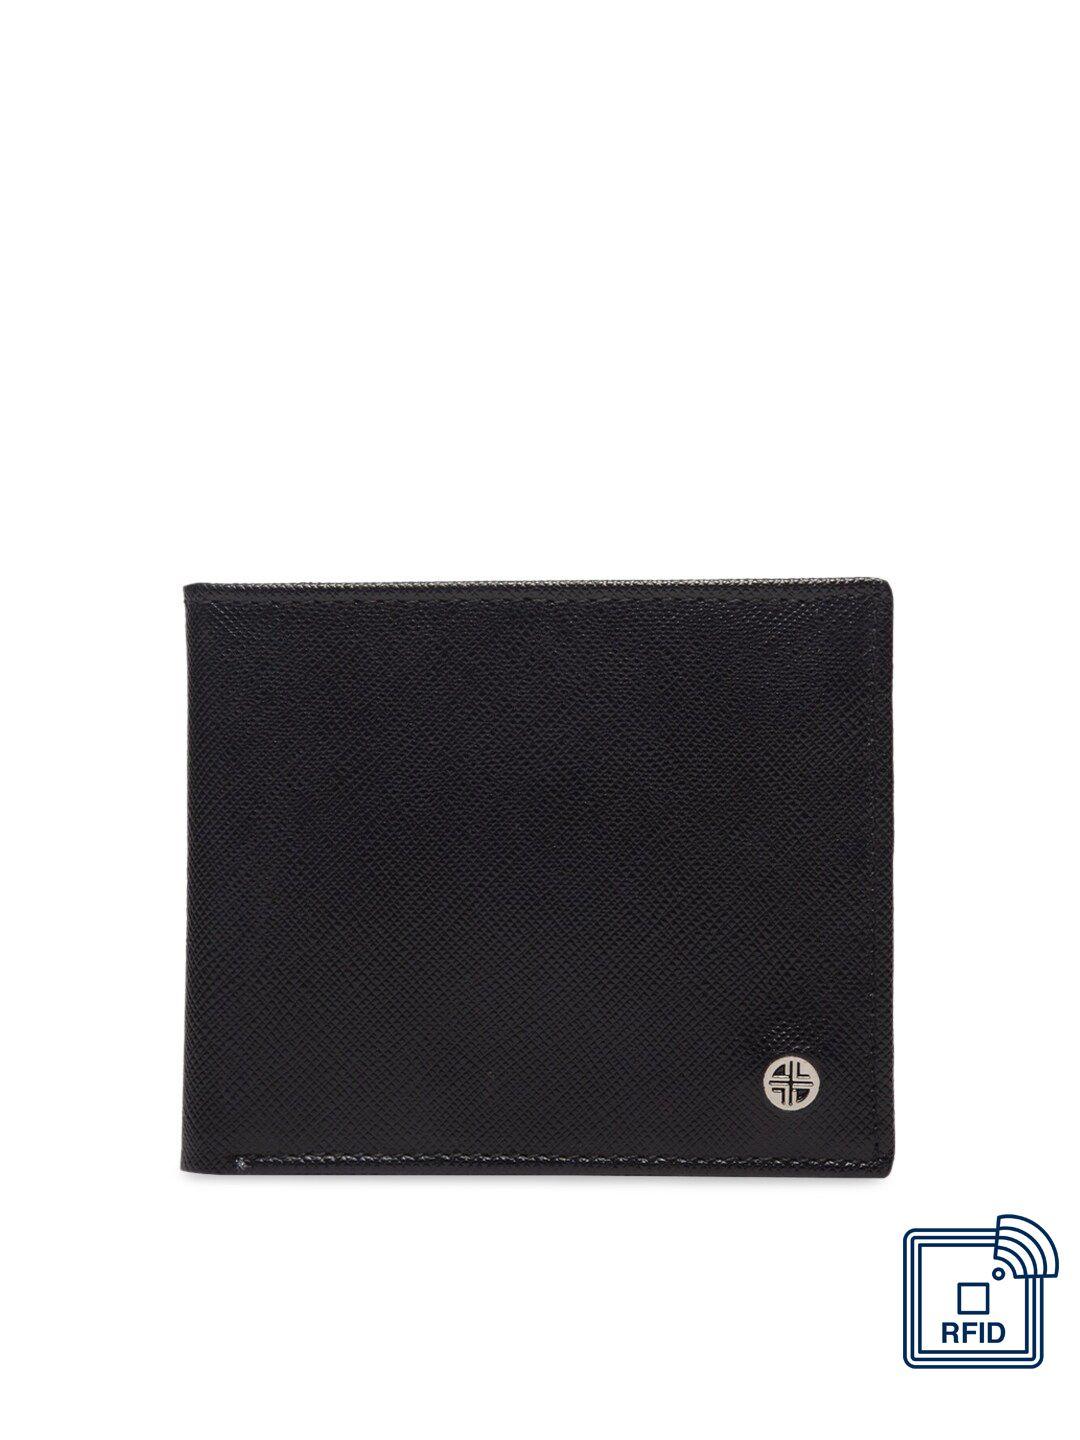 carlton london men black textured leather rfid two fold wallet